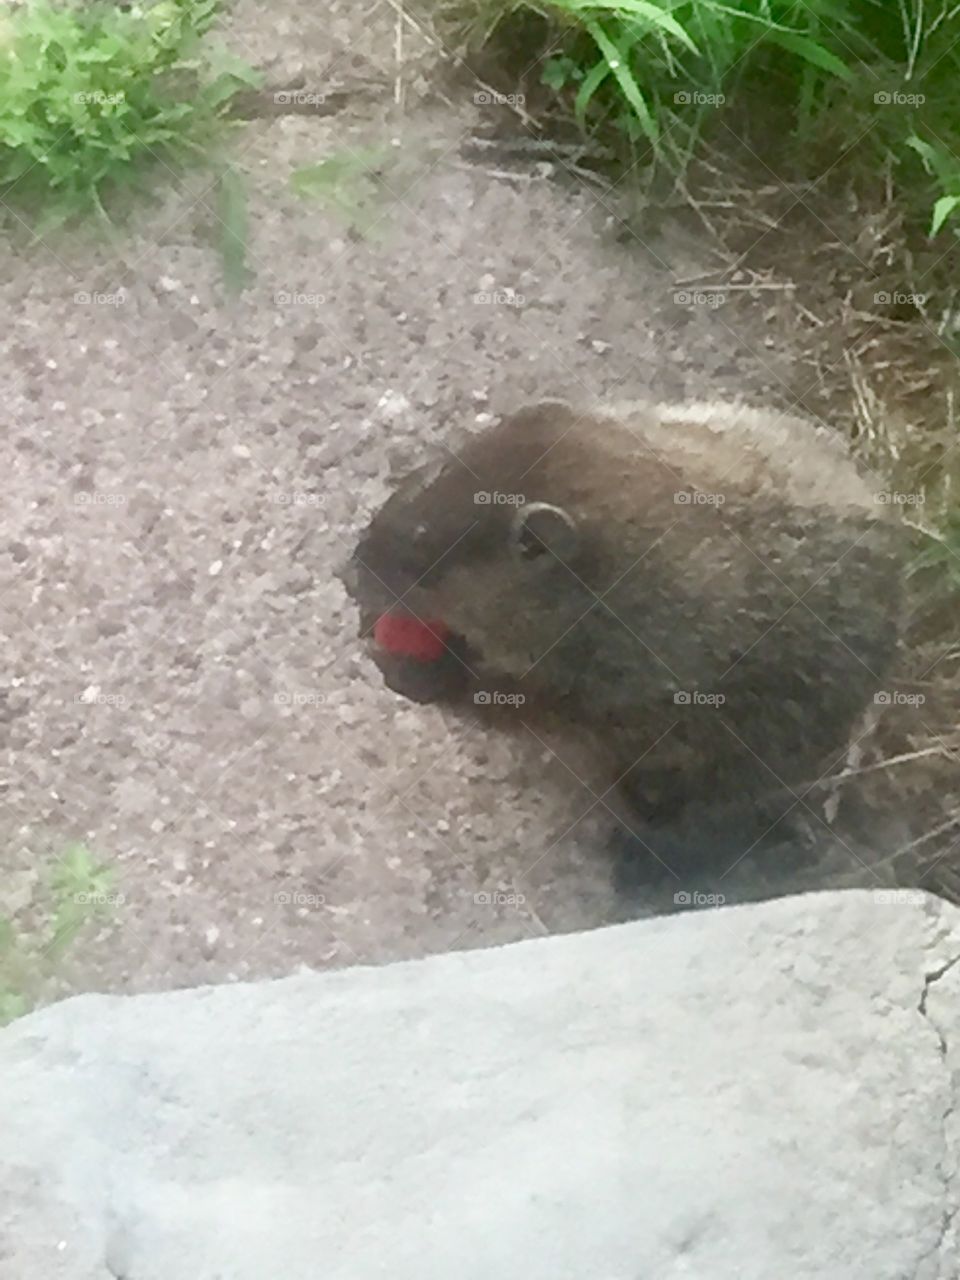 Groundhog Eating strawberry 